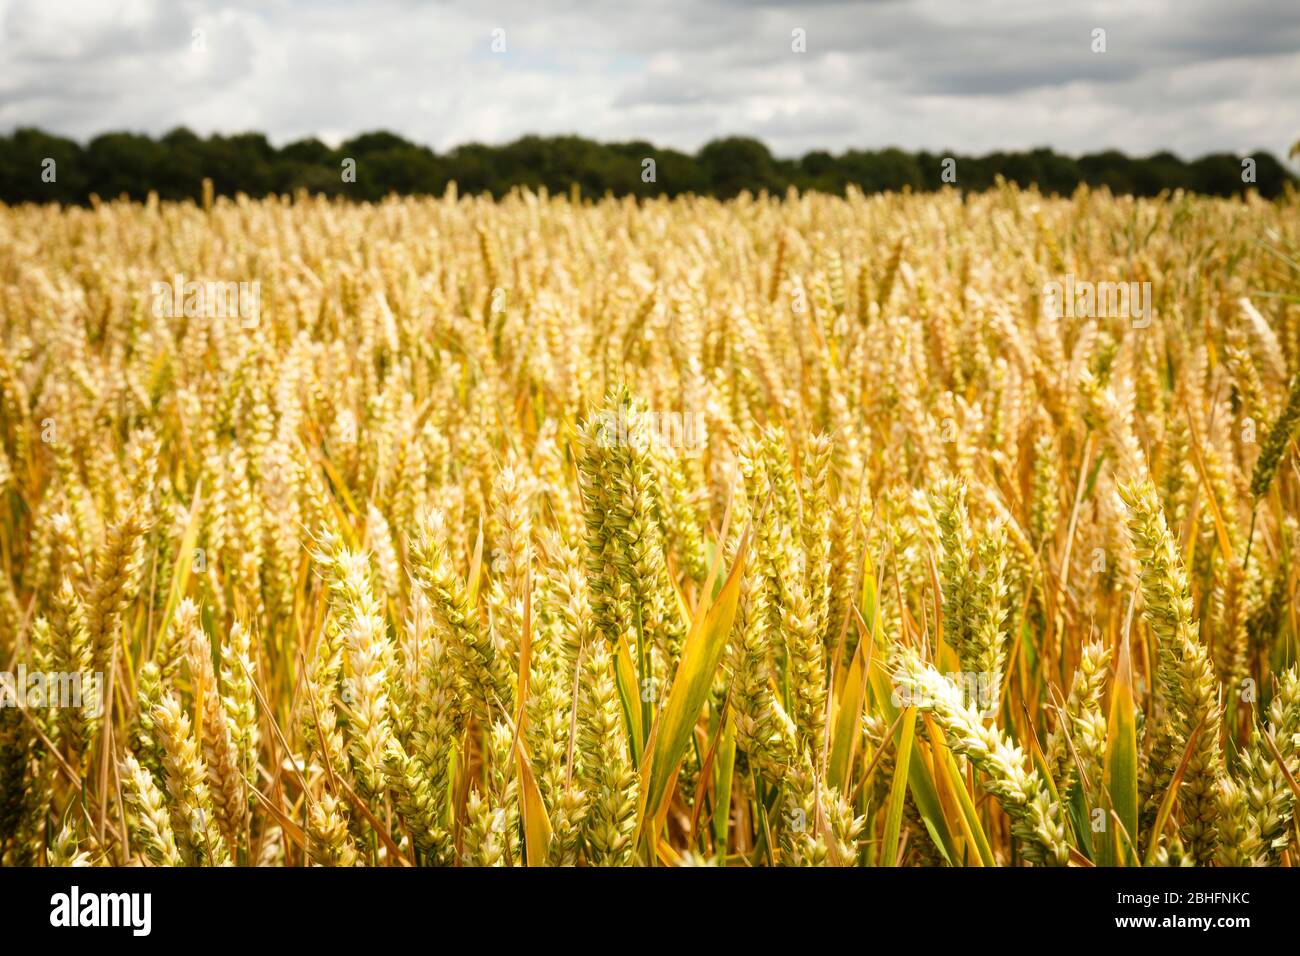 Nahaufnahme von goldenen Weizenohren in einem Feld im Sommer, UK Farmszene Stockfoto